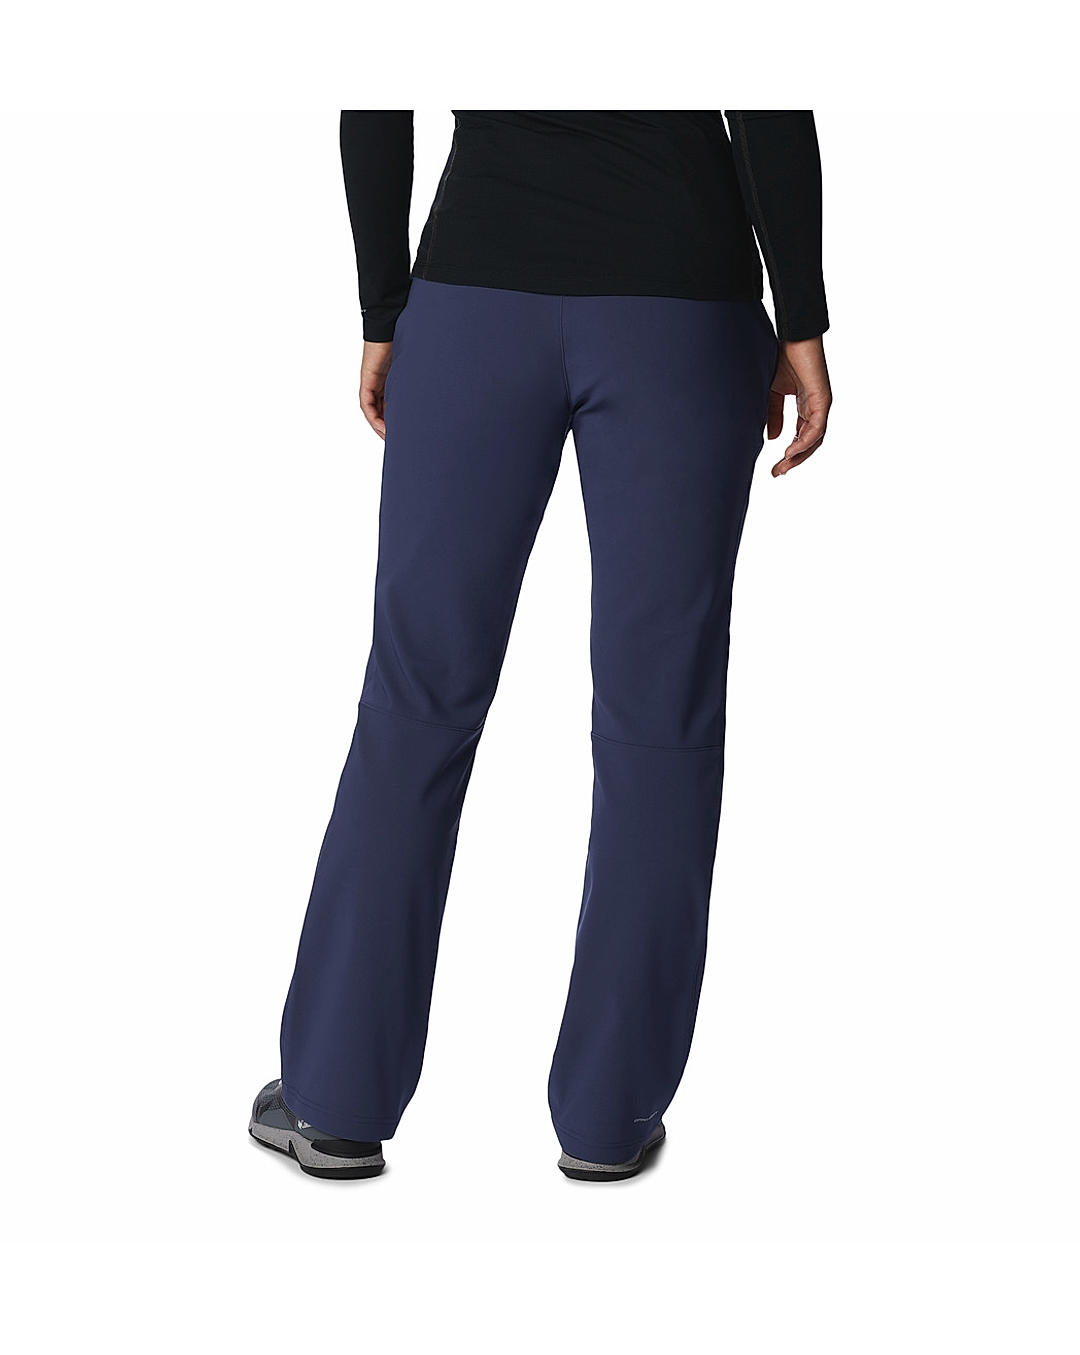 Columbia Blue Pinstripe Baseball Pants Full Length  JayMac Sports Products